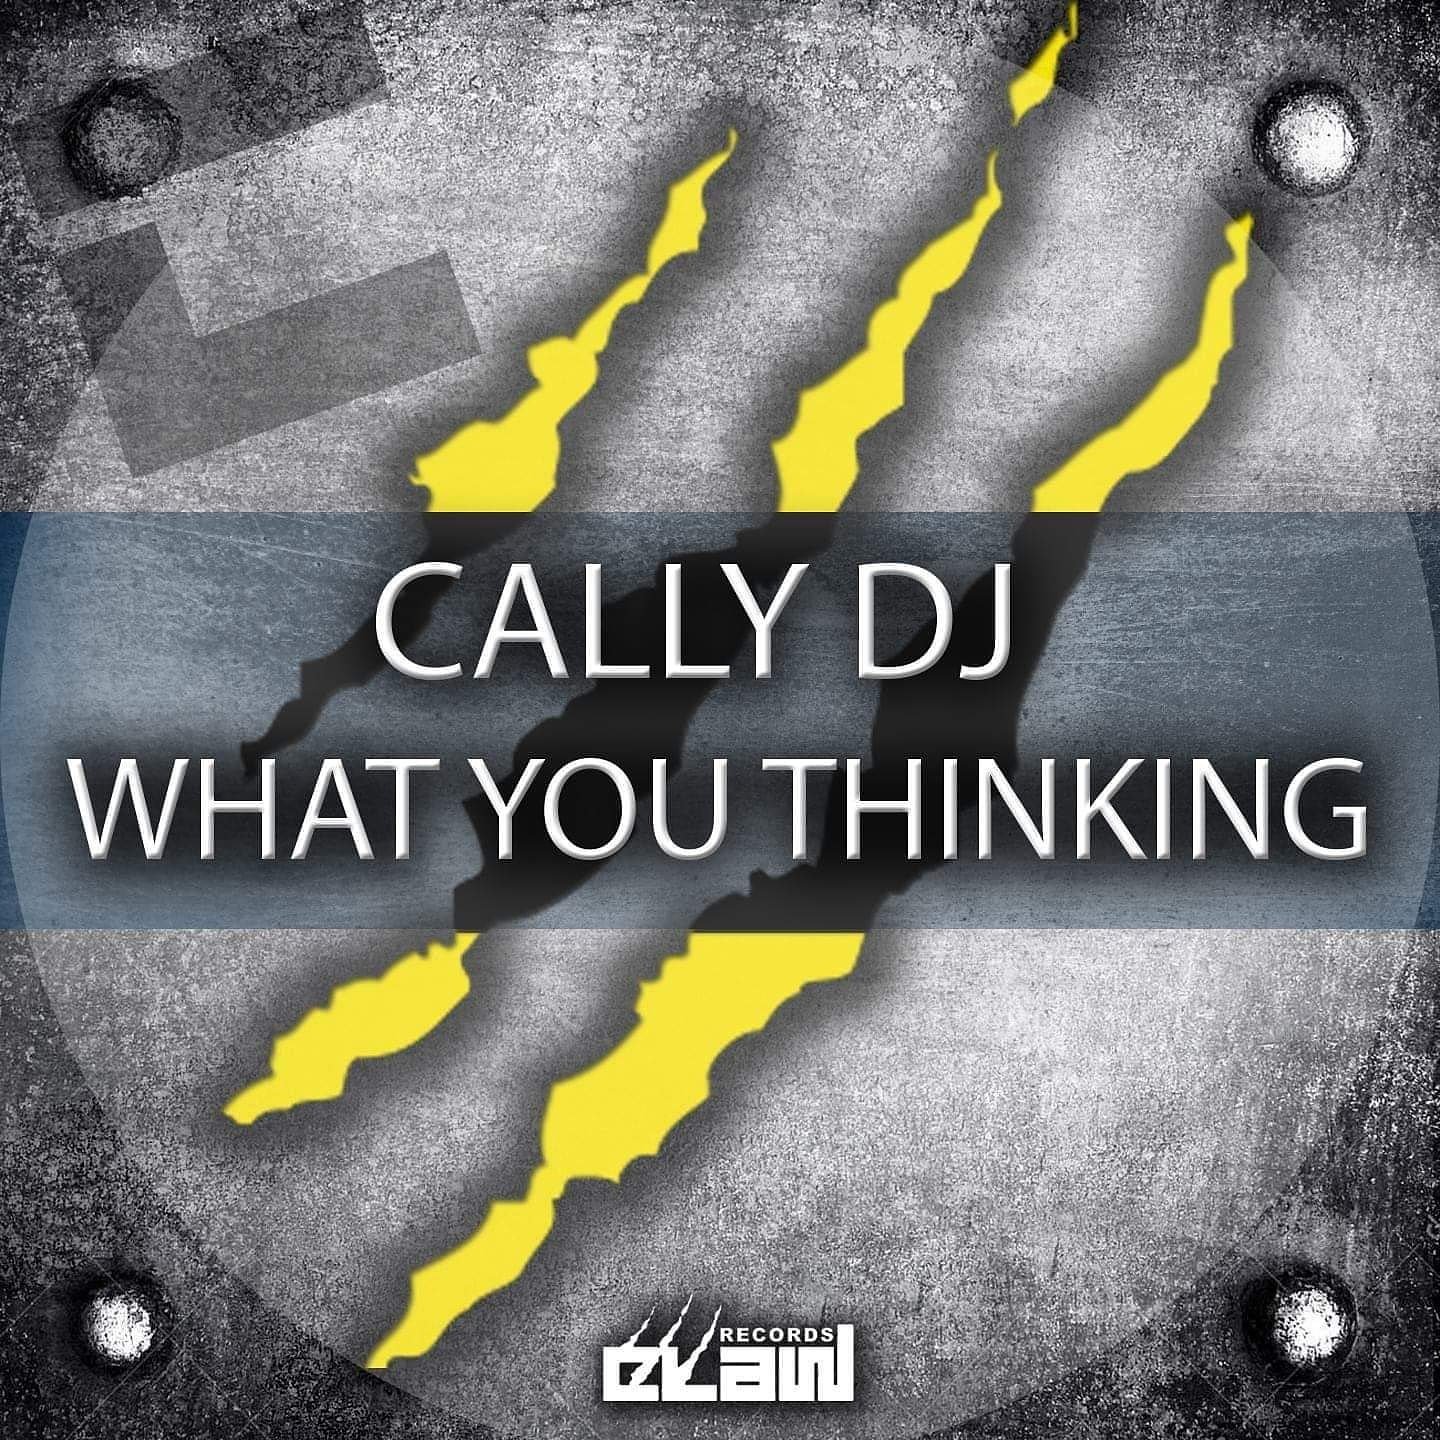 Cally dj dj e produttore dal Friuli